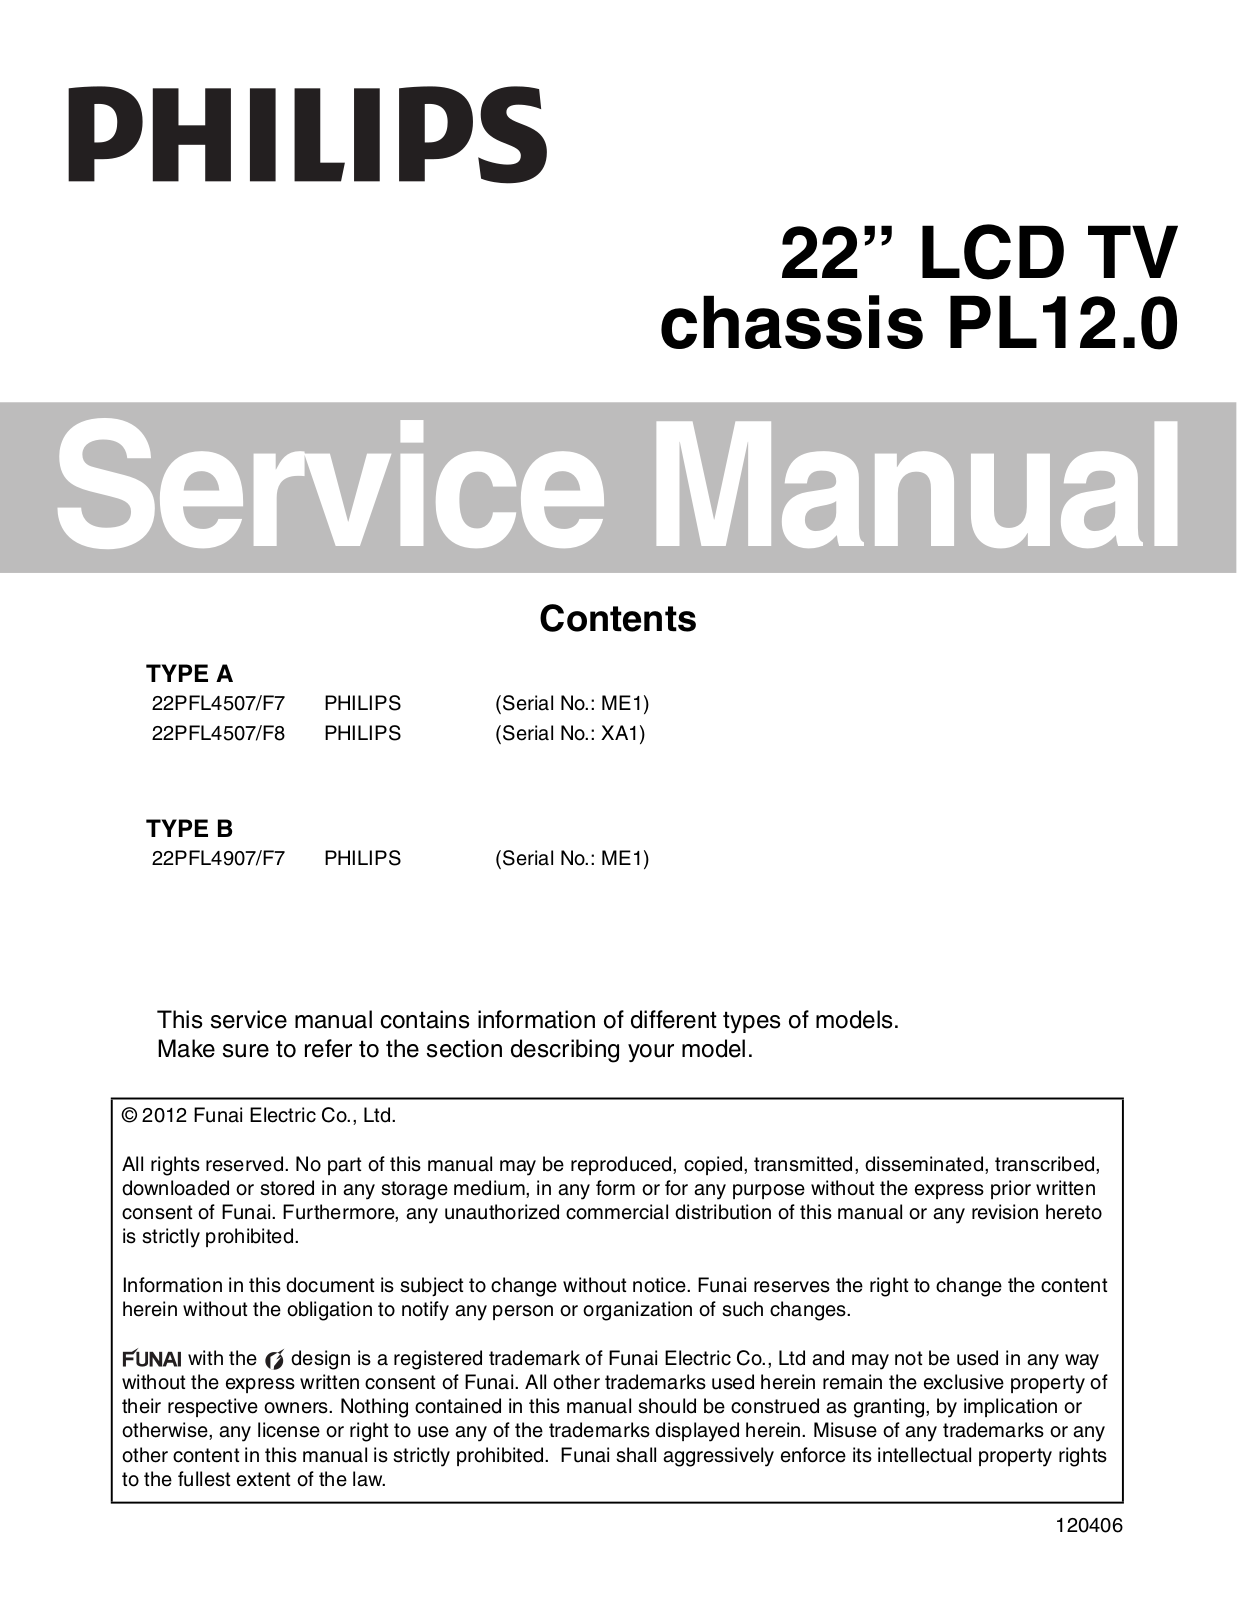 Philips 22PFL4507-F7 Service Manual